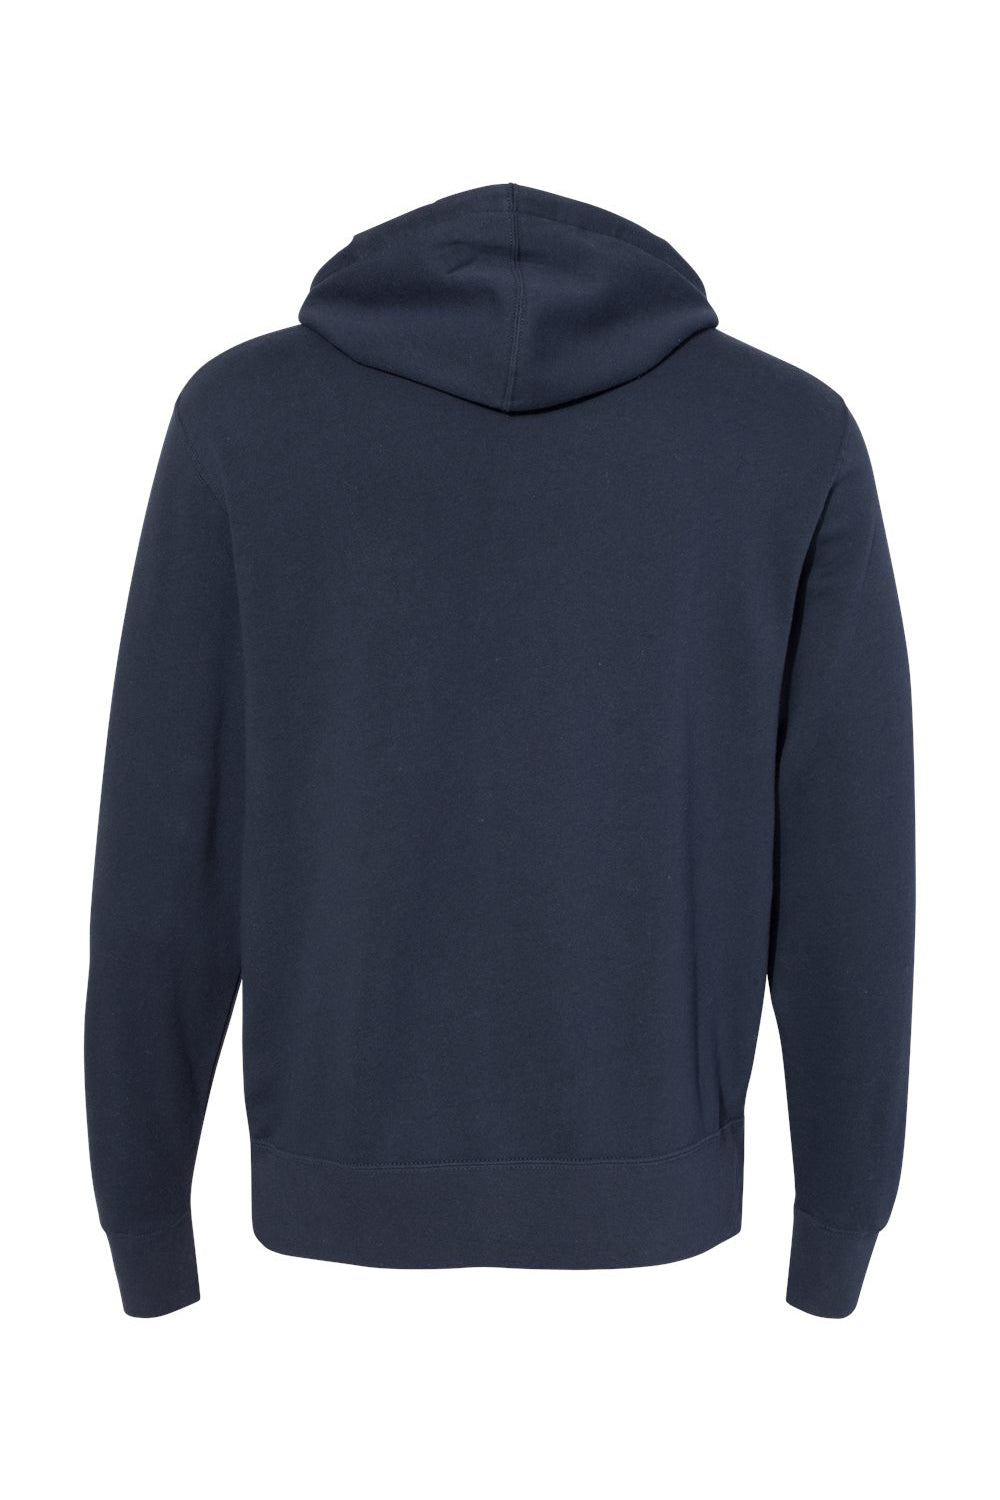 Independent Trading Co. AFX90UN Mens Hooded Sweatshirt Hoodie Slate Blue Flat Back